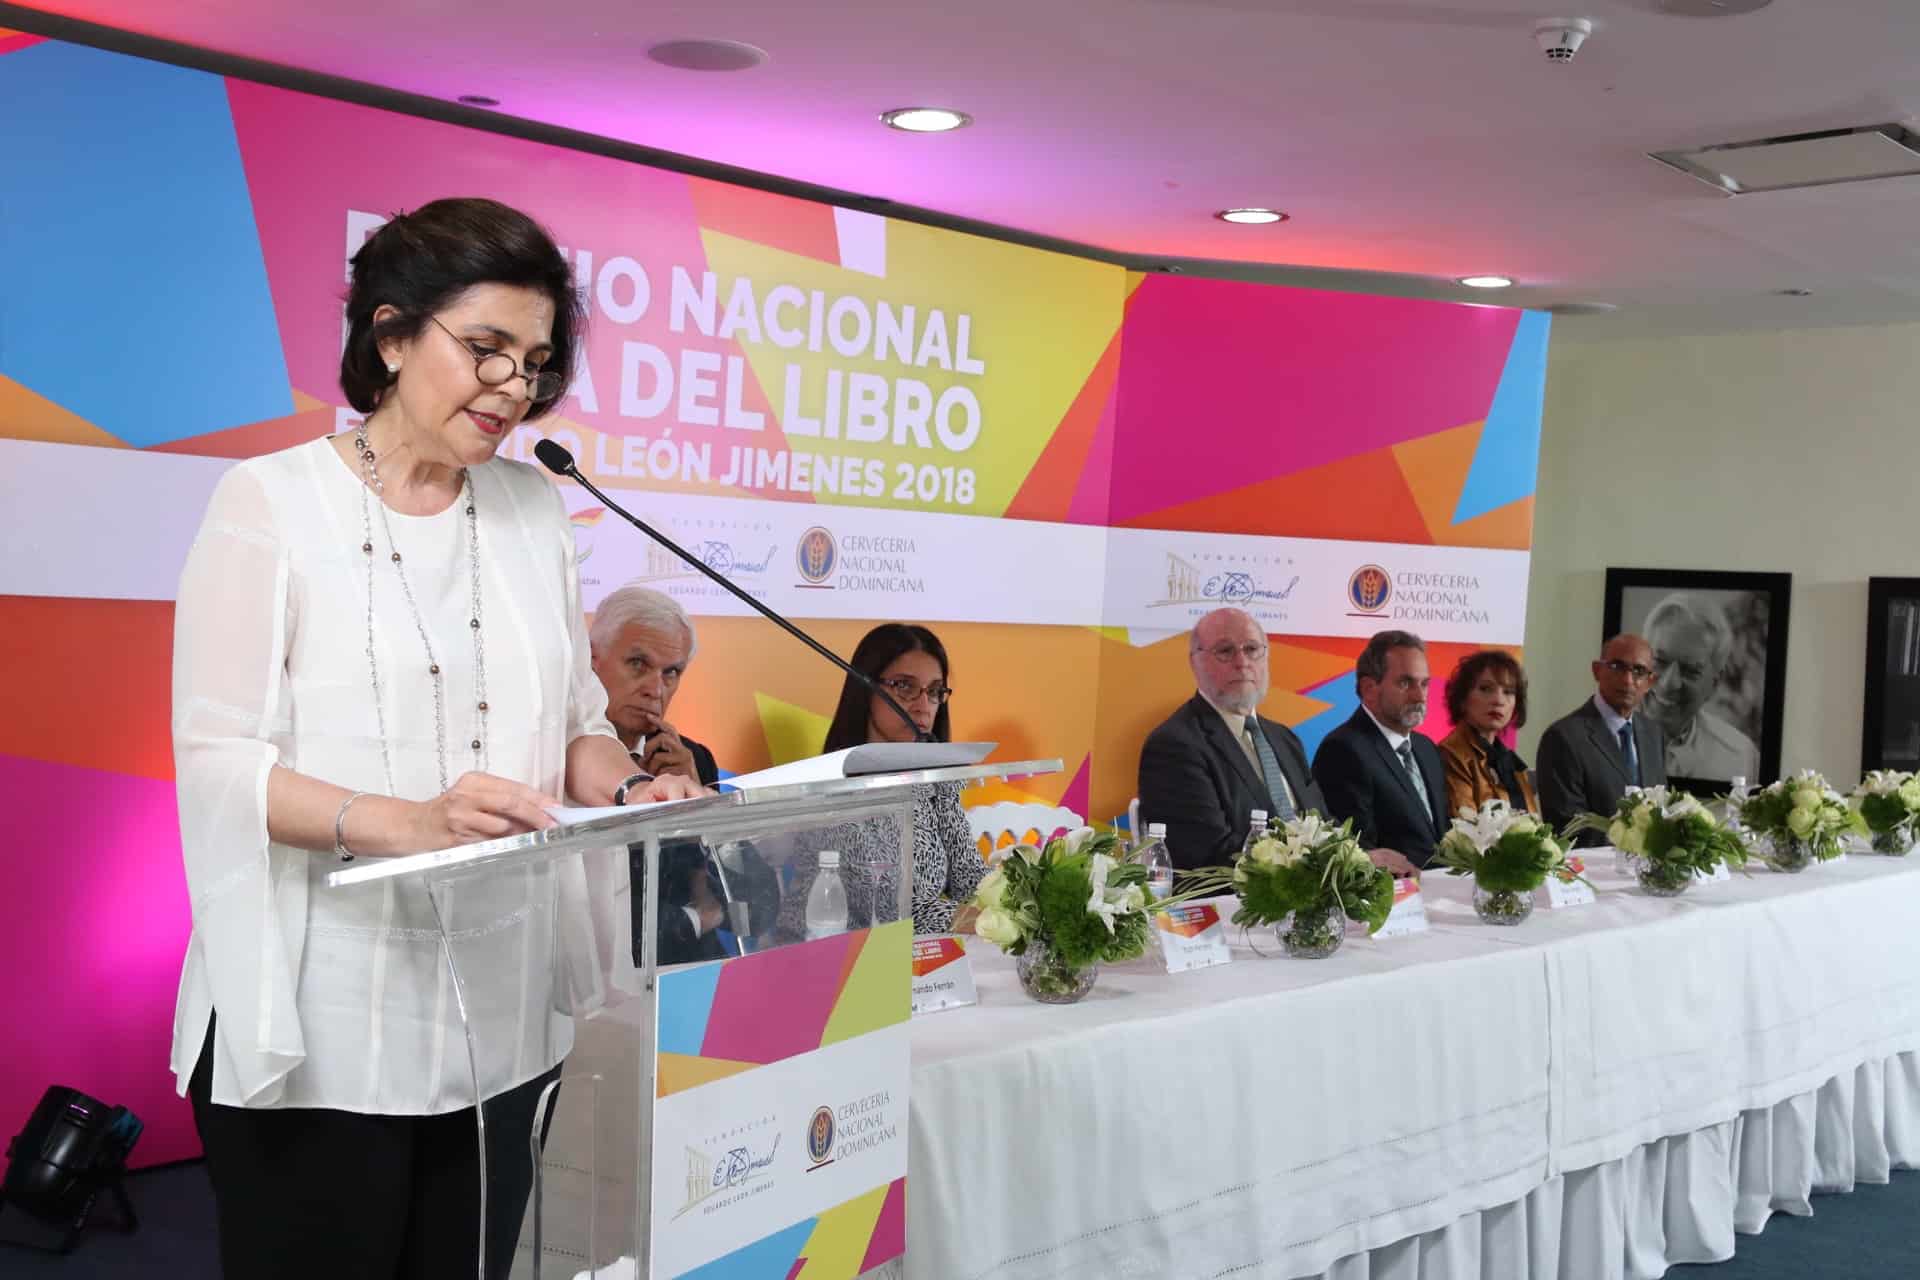 Preis der Nationalen Buchmesse Eduardo León Jimenes